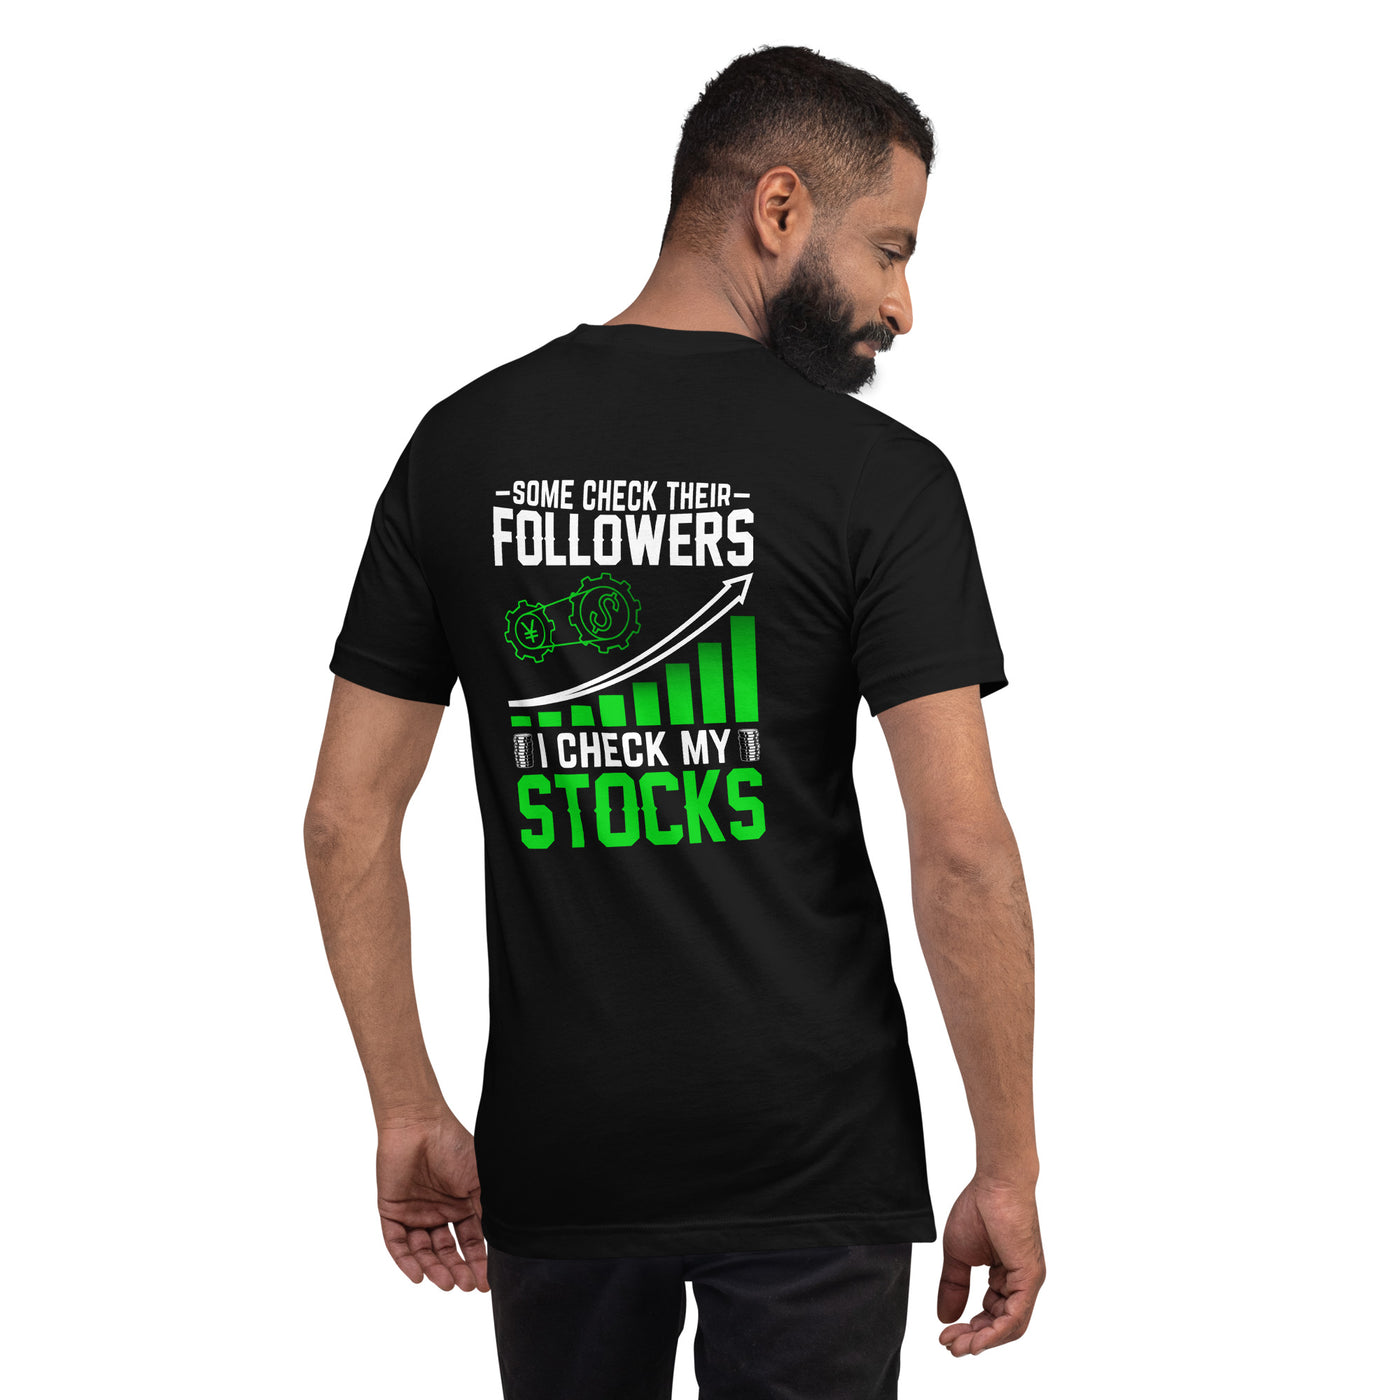 Some Check their followers; I Check my Stocks - Unisex t-shirt ( Back Print )